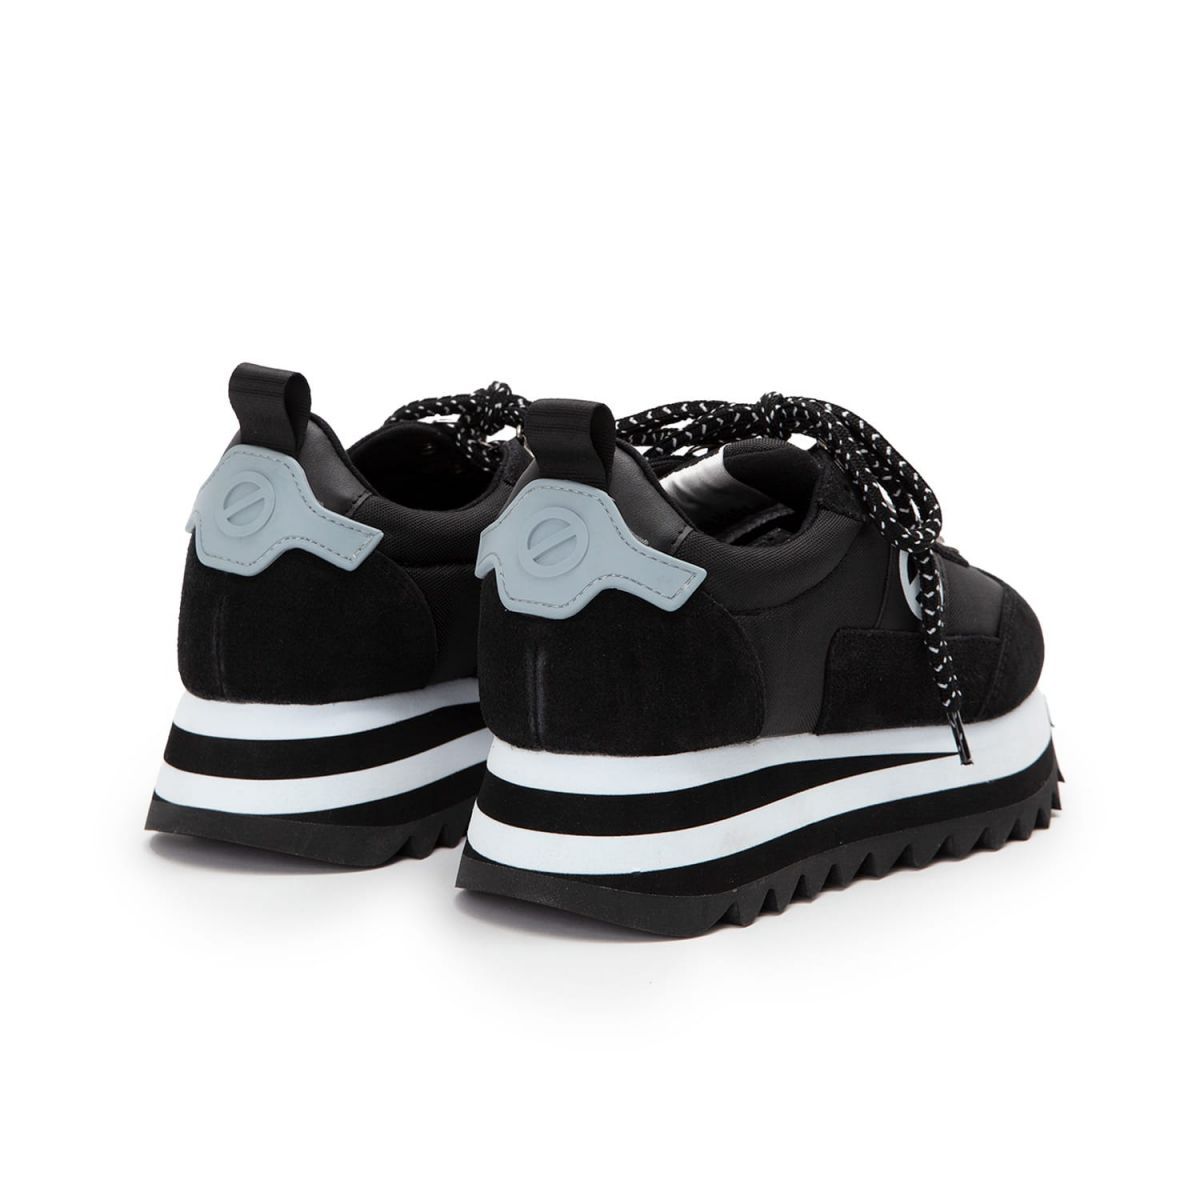 Flex M Ripple Suede Black Sneakers JNIYGM0415 - 4